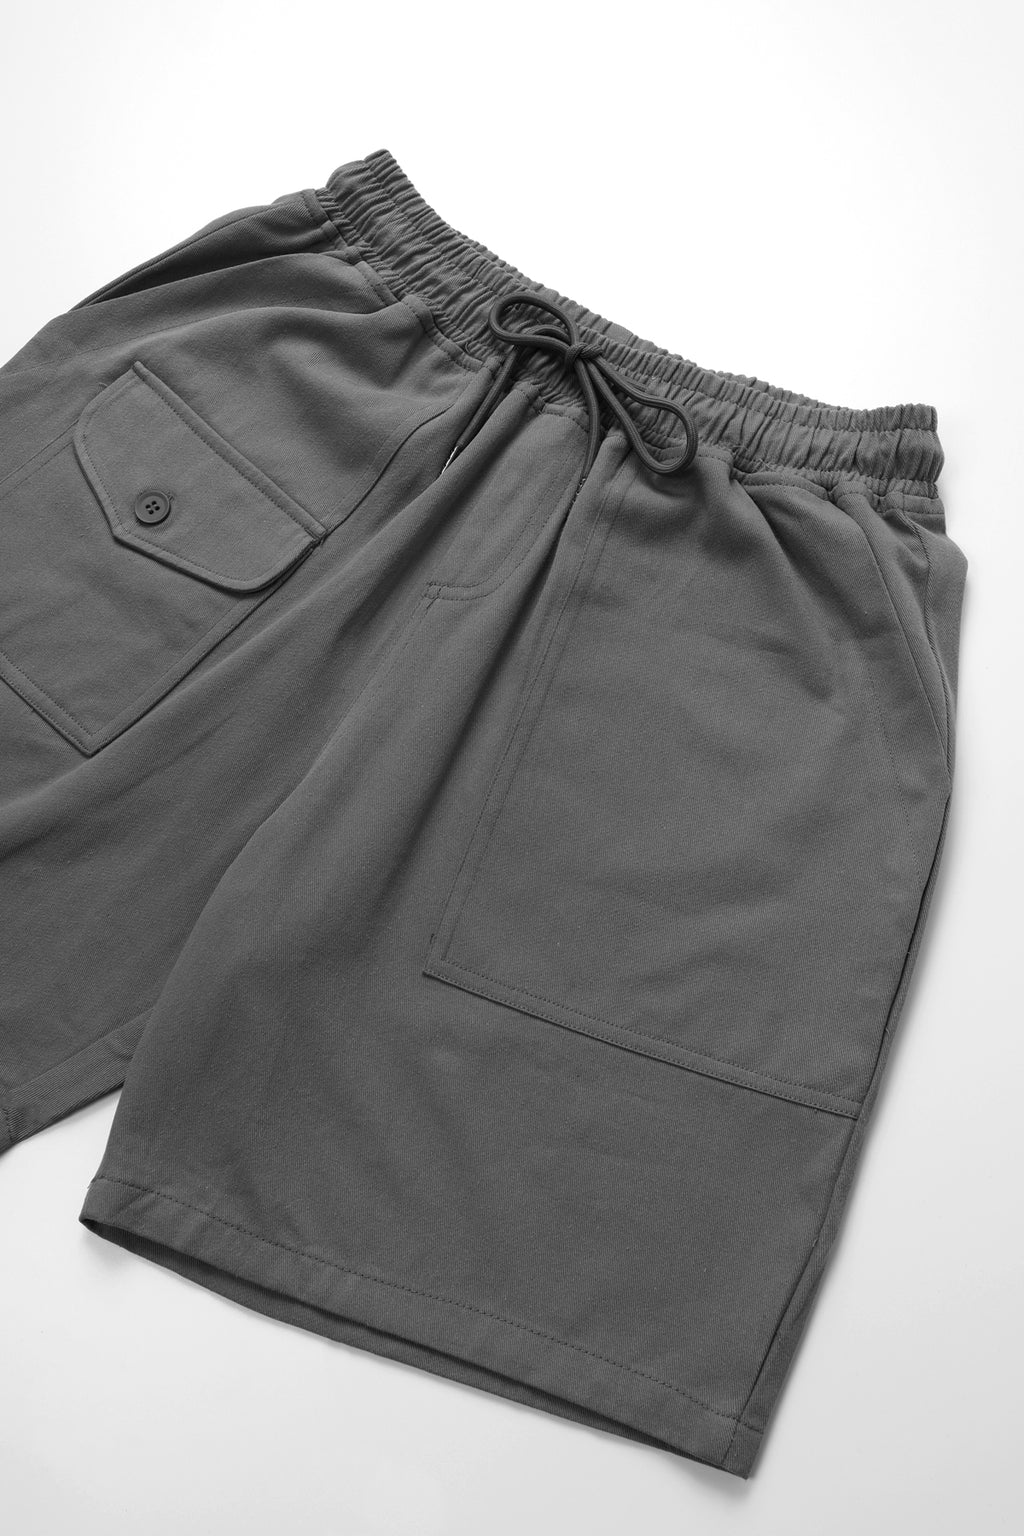 Blacksmith - Beach Cargo Shorts - Grey